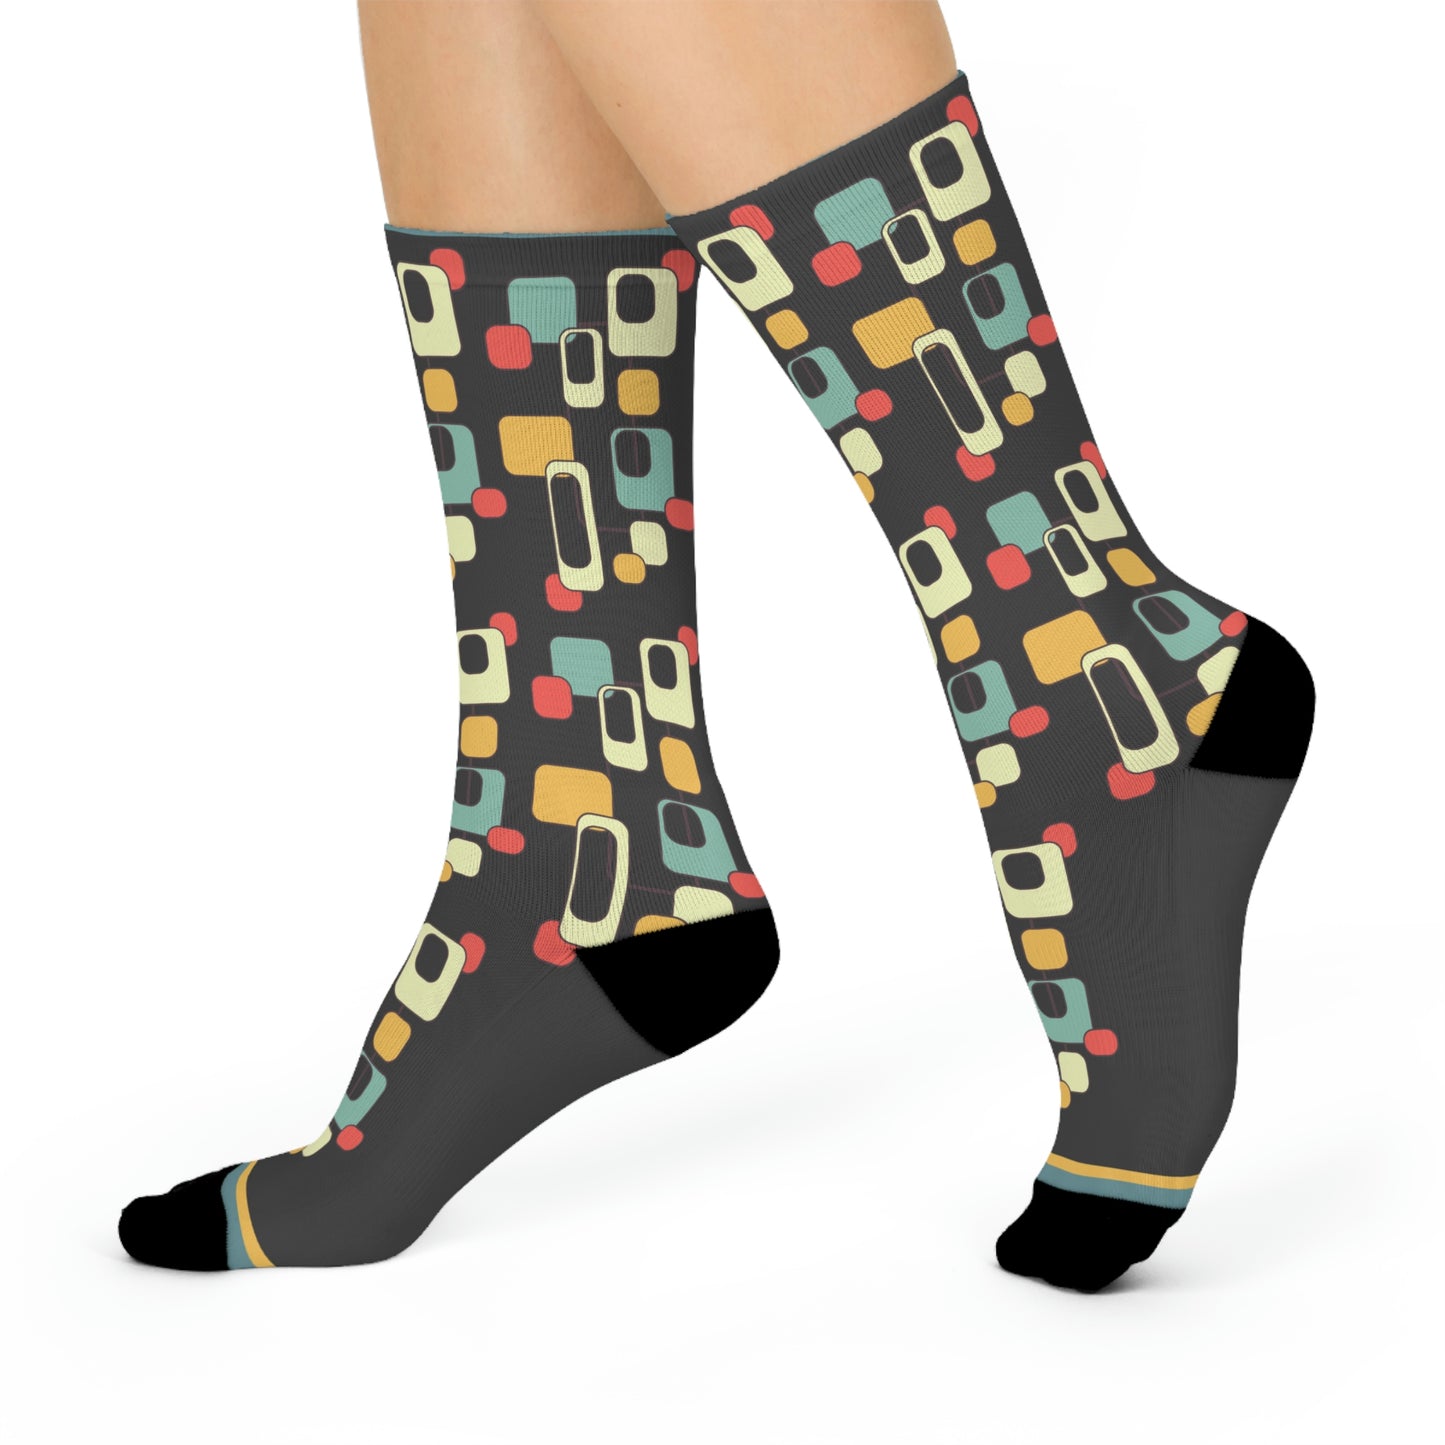 Retro Design Socks